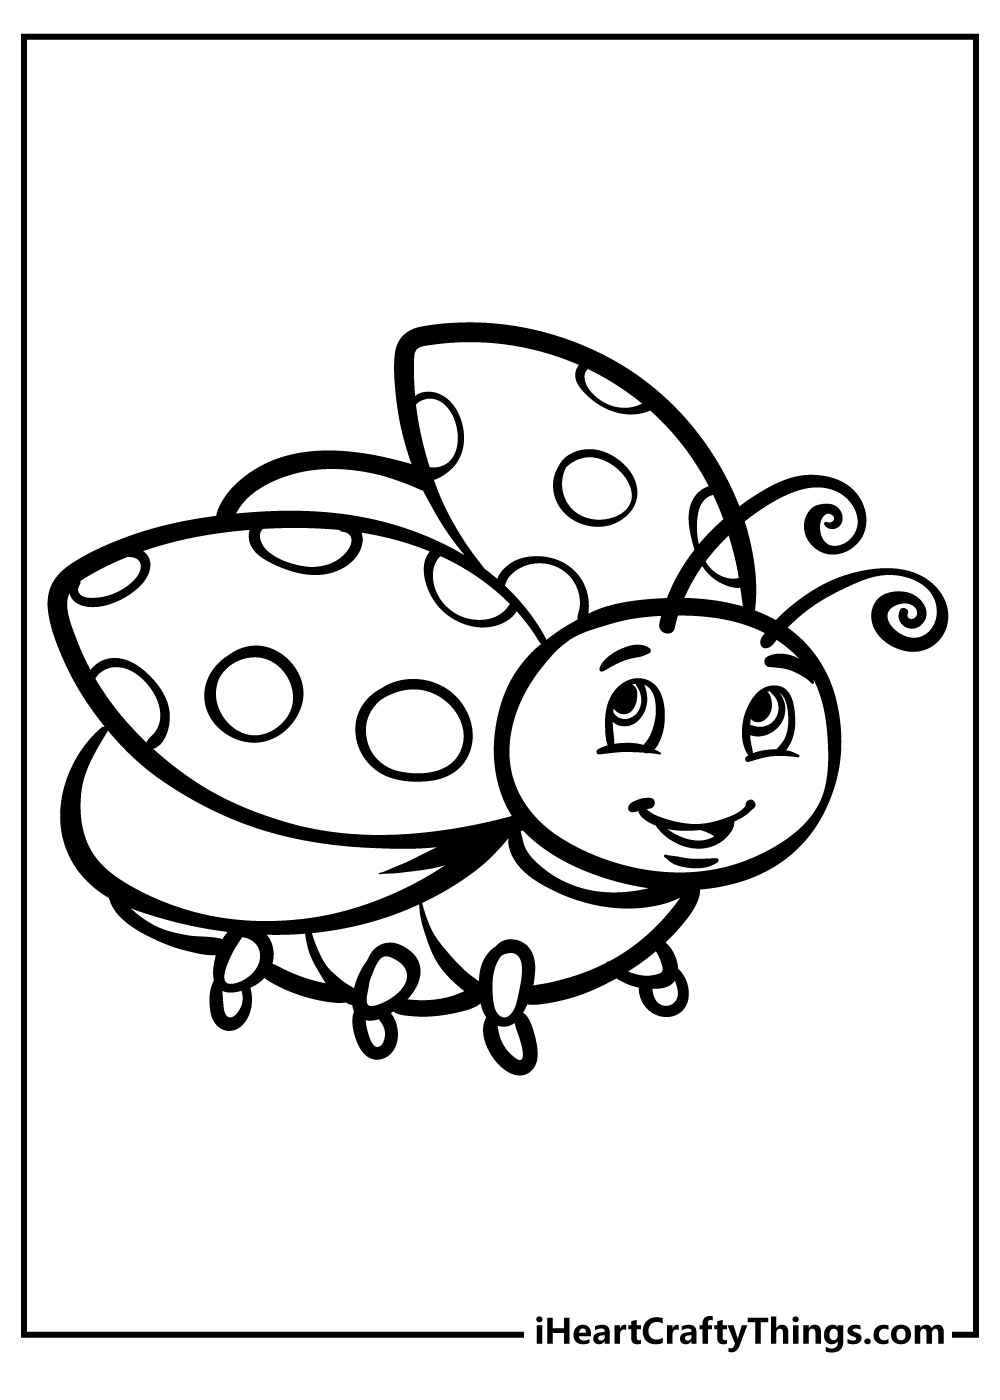 Ladybug Coloring Original Sheet for children free download